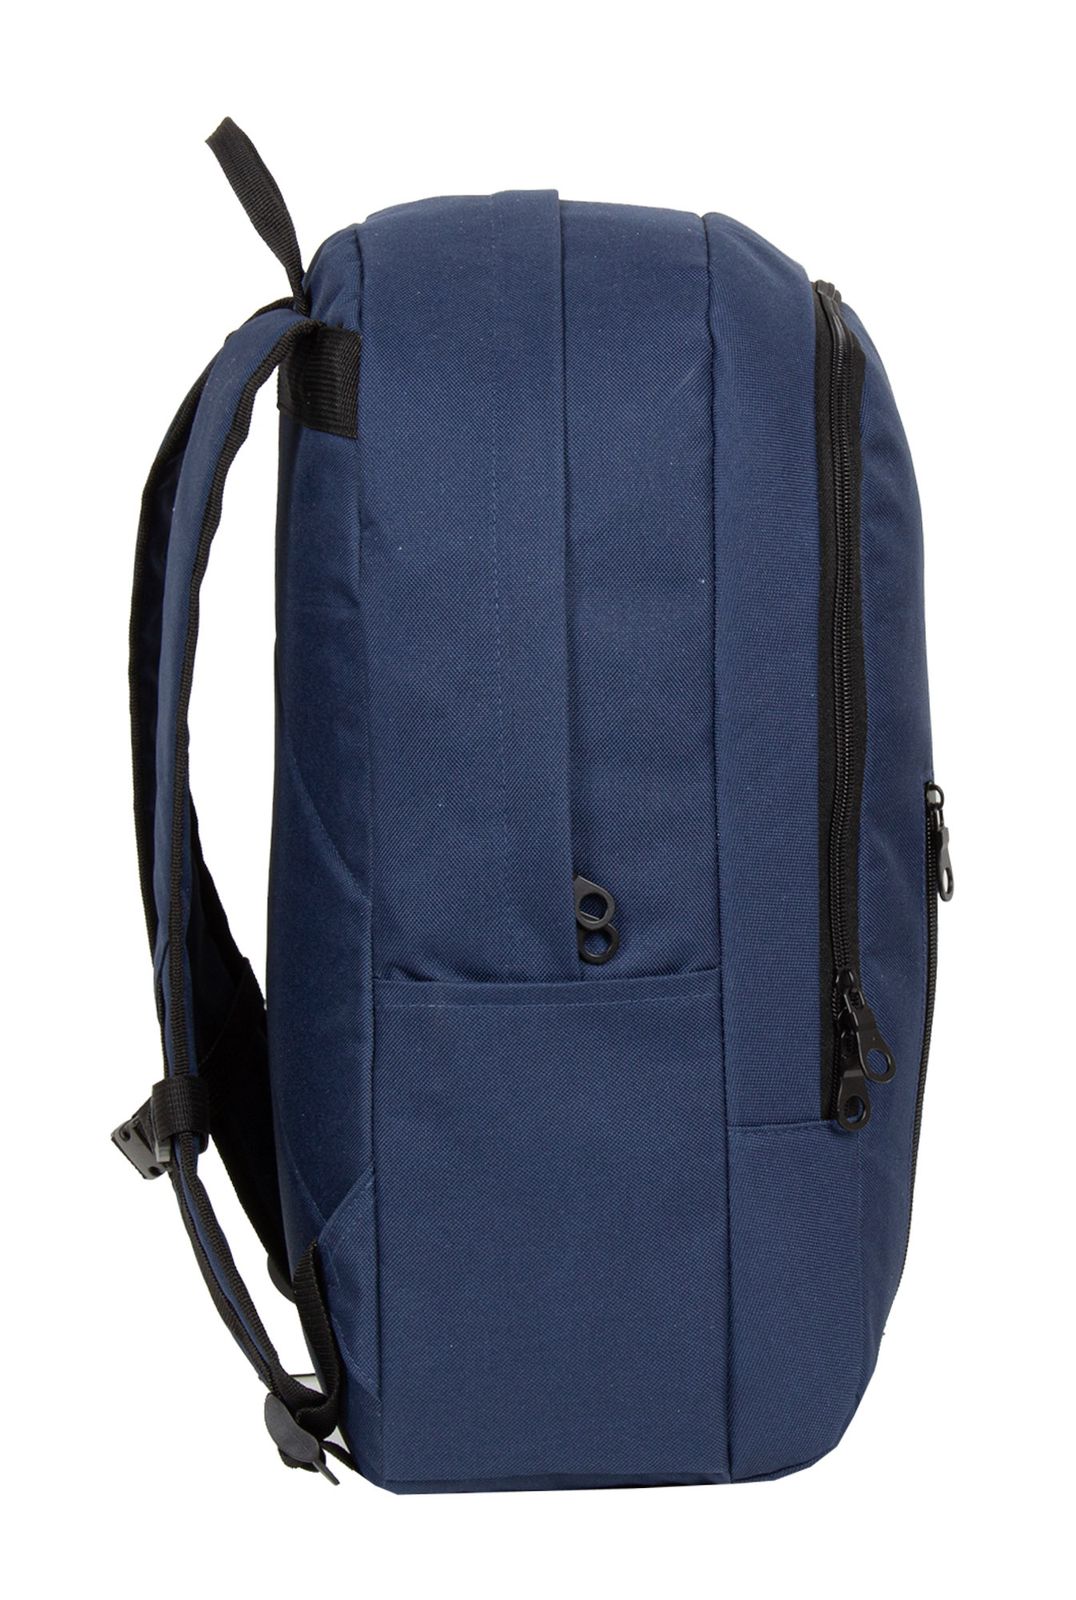 MUSTANG backpack Tucson Backpack Navy | Buy bags, purses & accessories ...